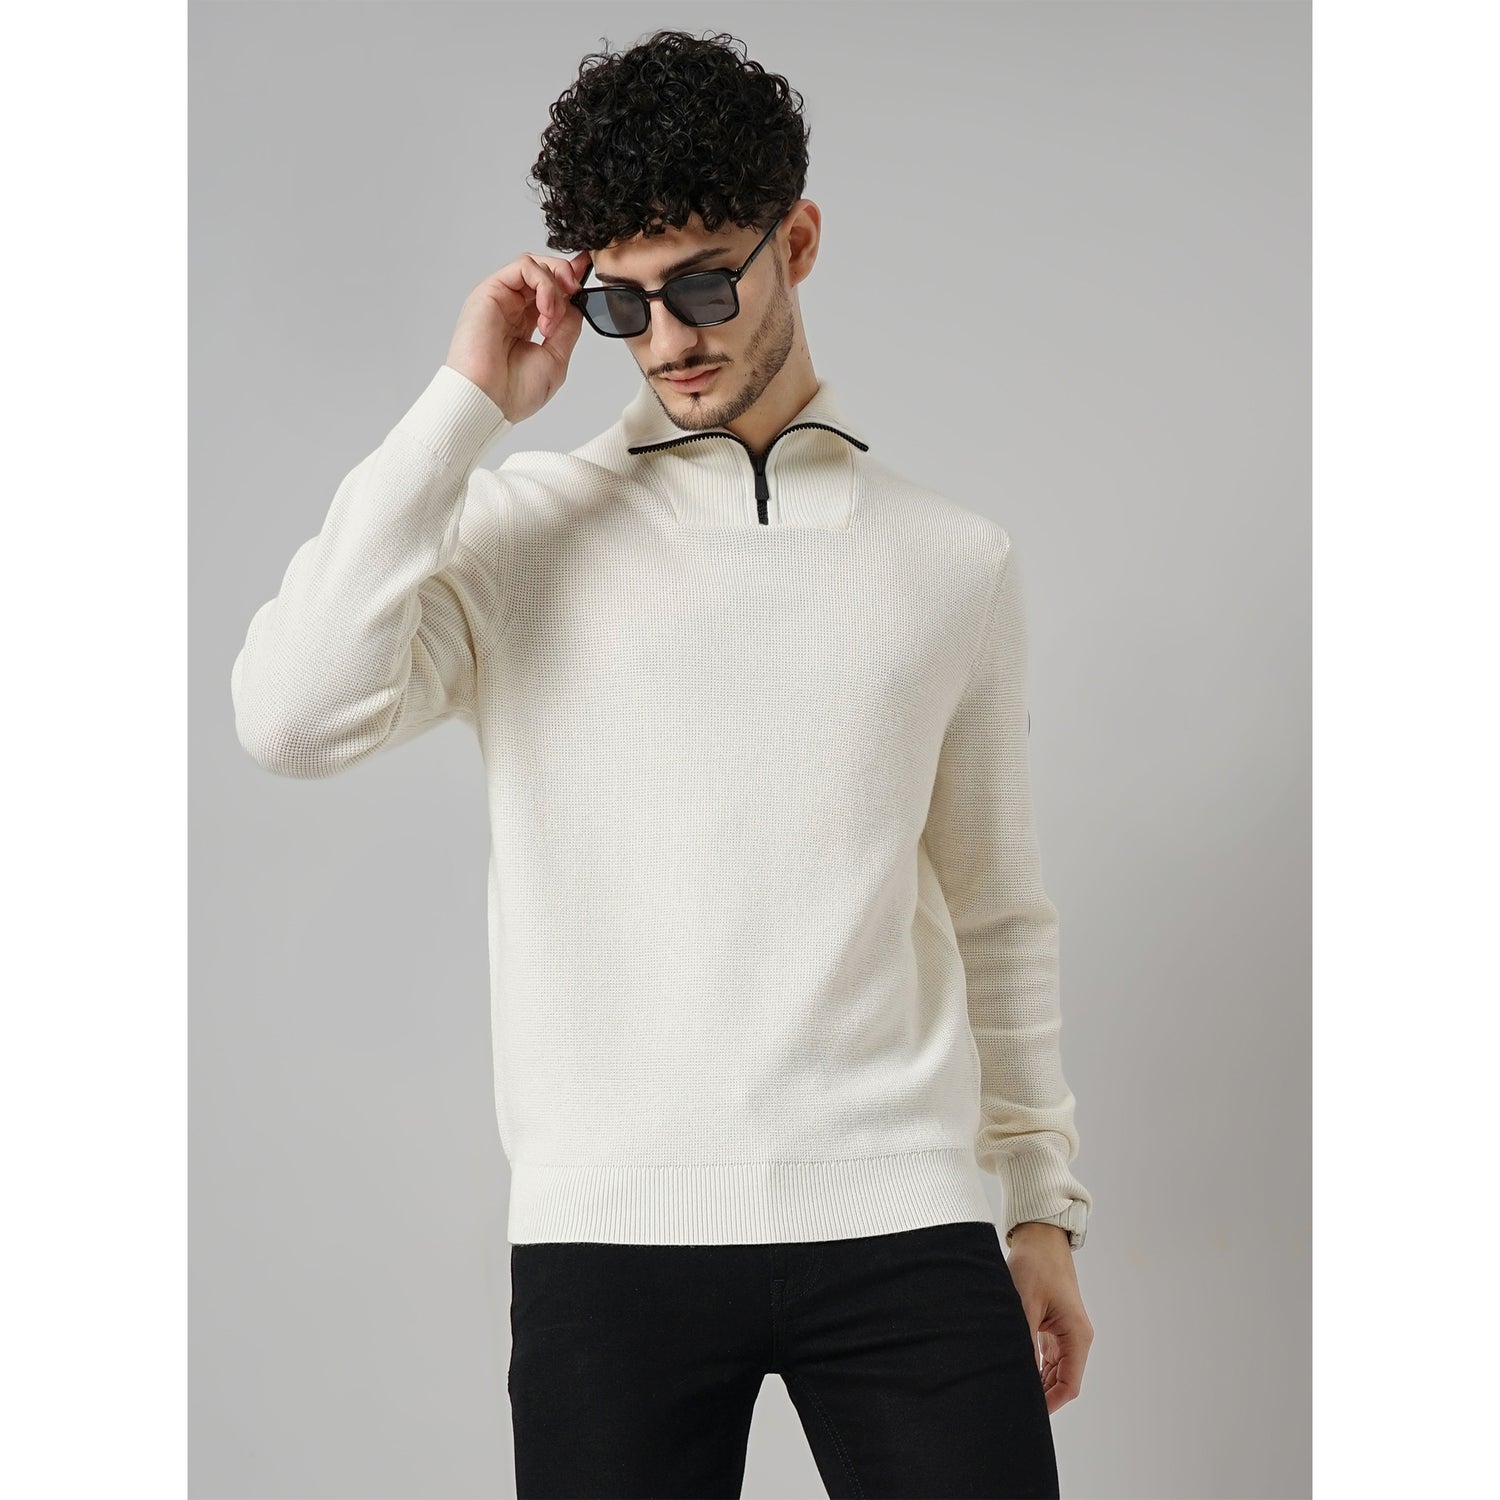 Solid Off White Full Chamonix Sweatshirt (LFECHAMK12)